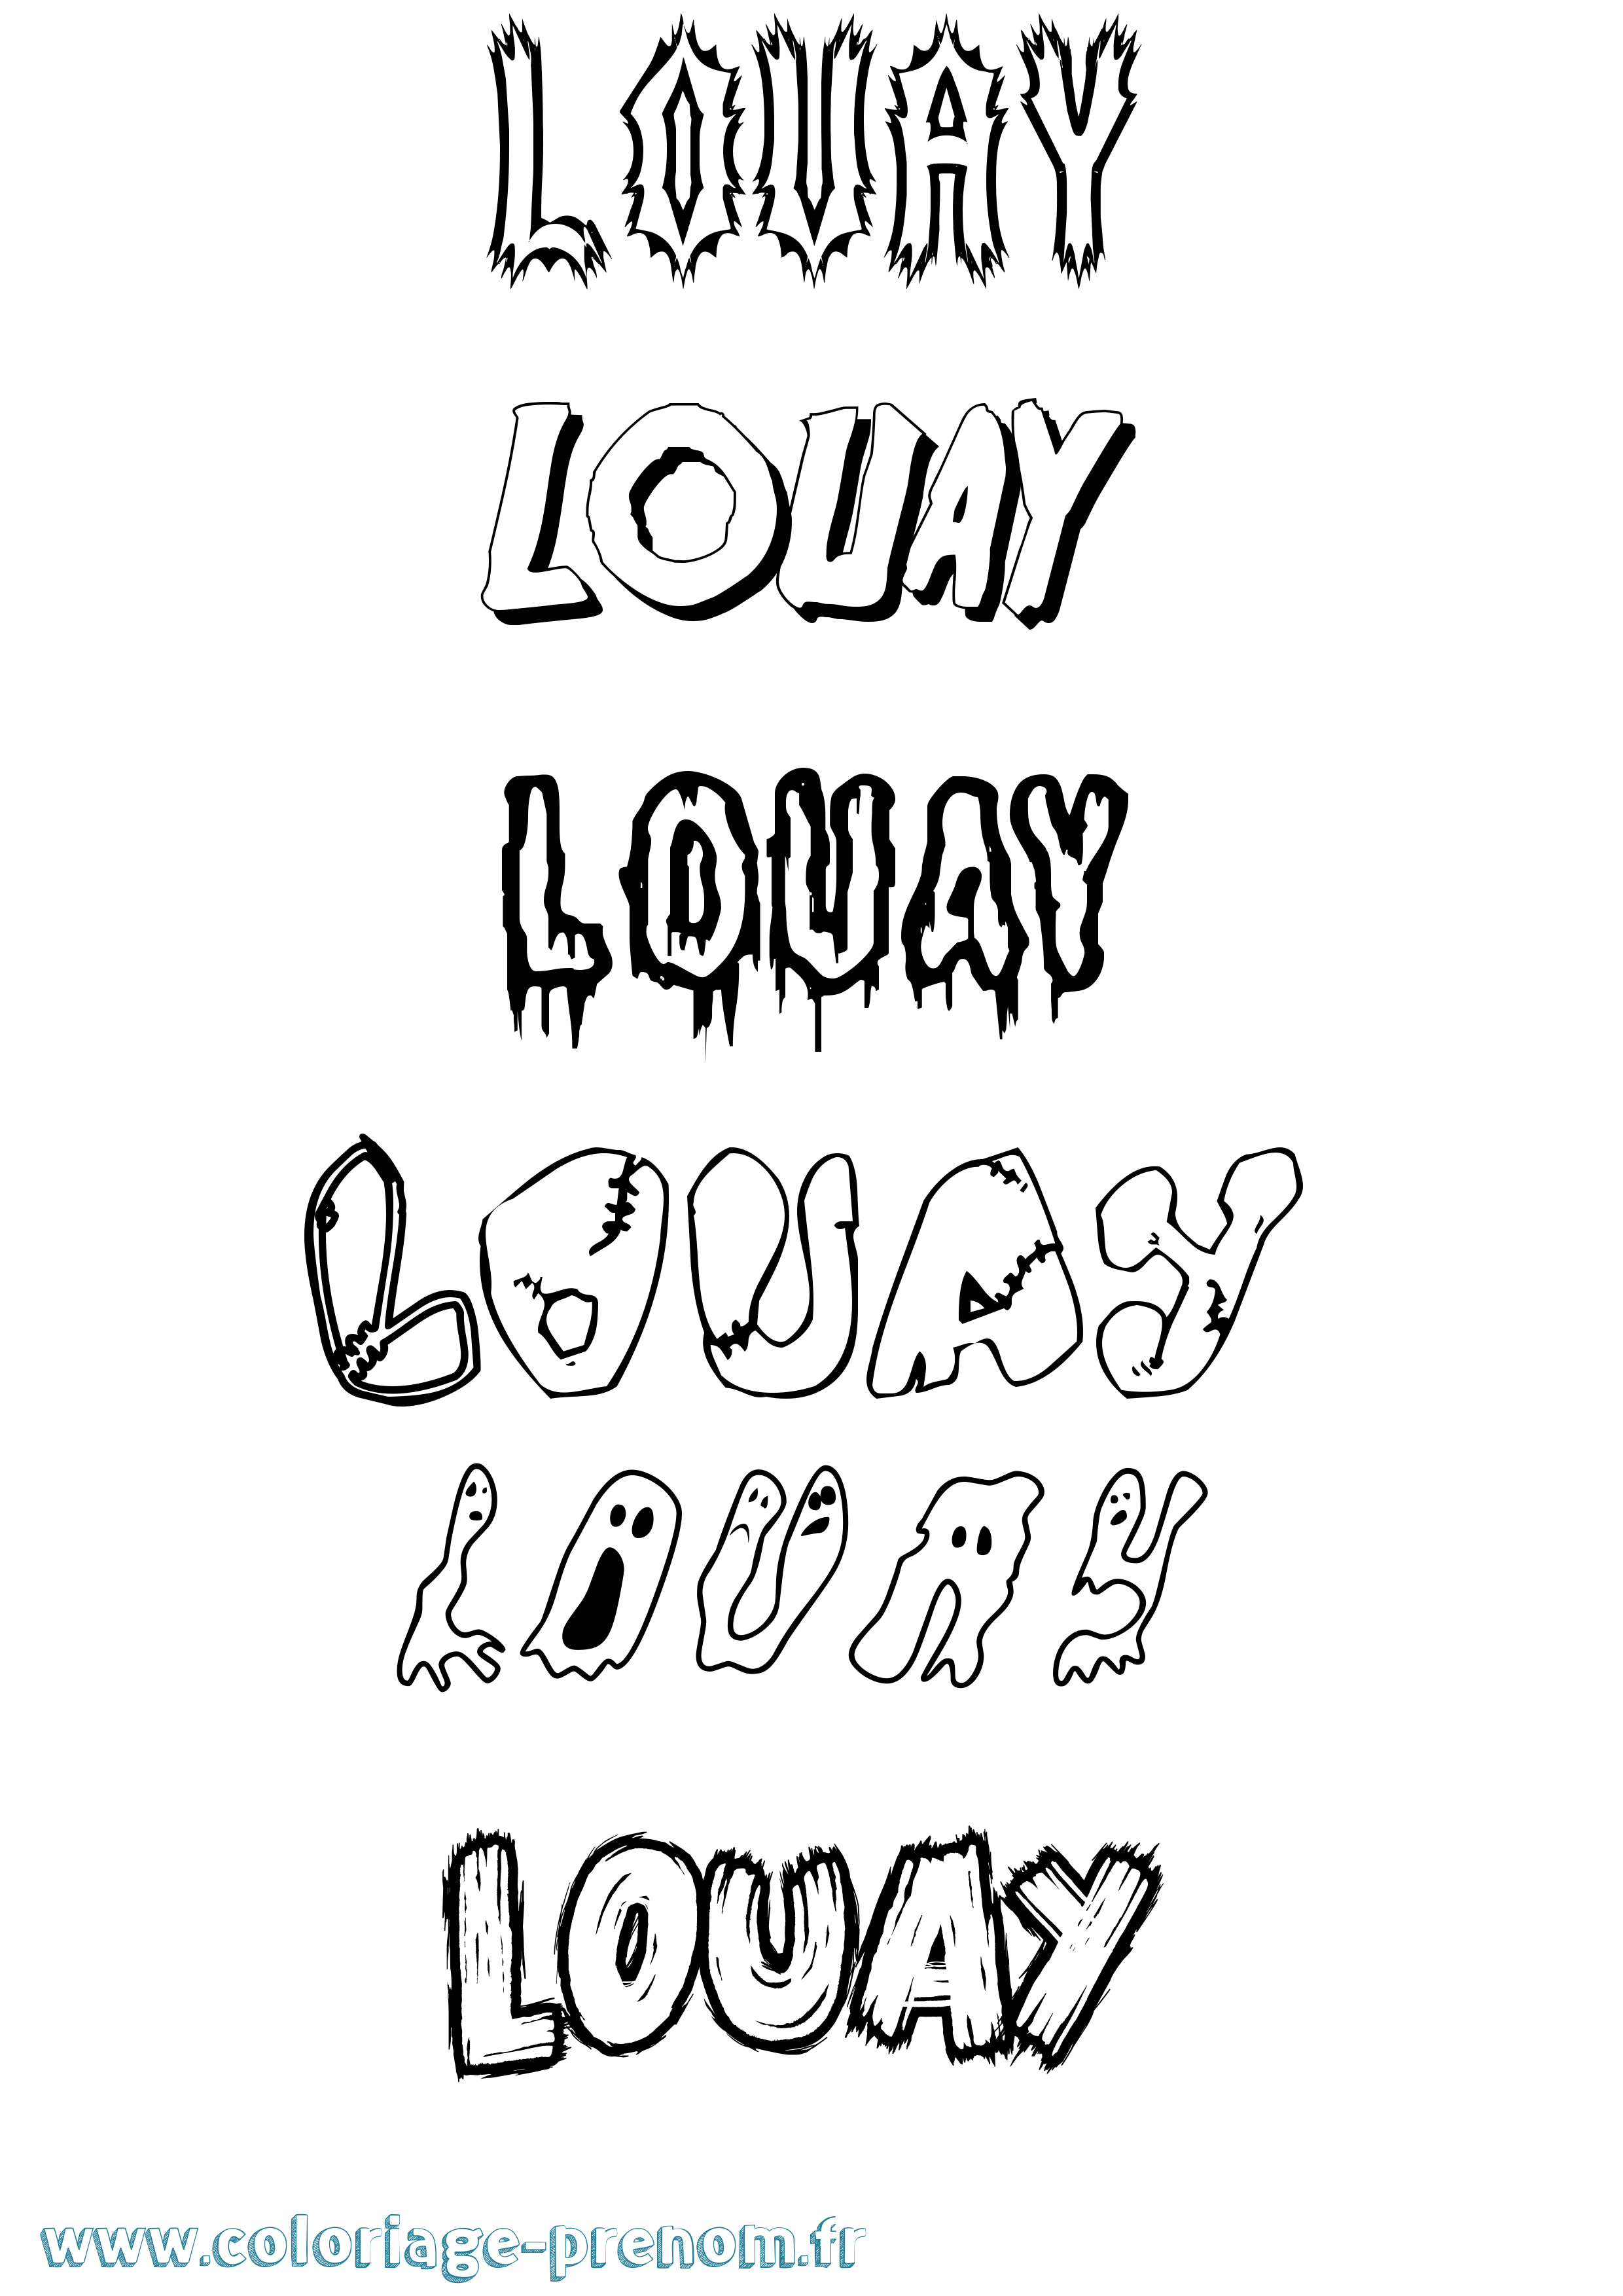 Coloriage prénom Louay